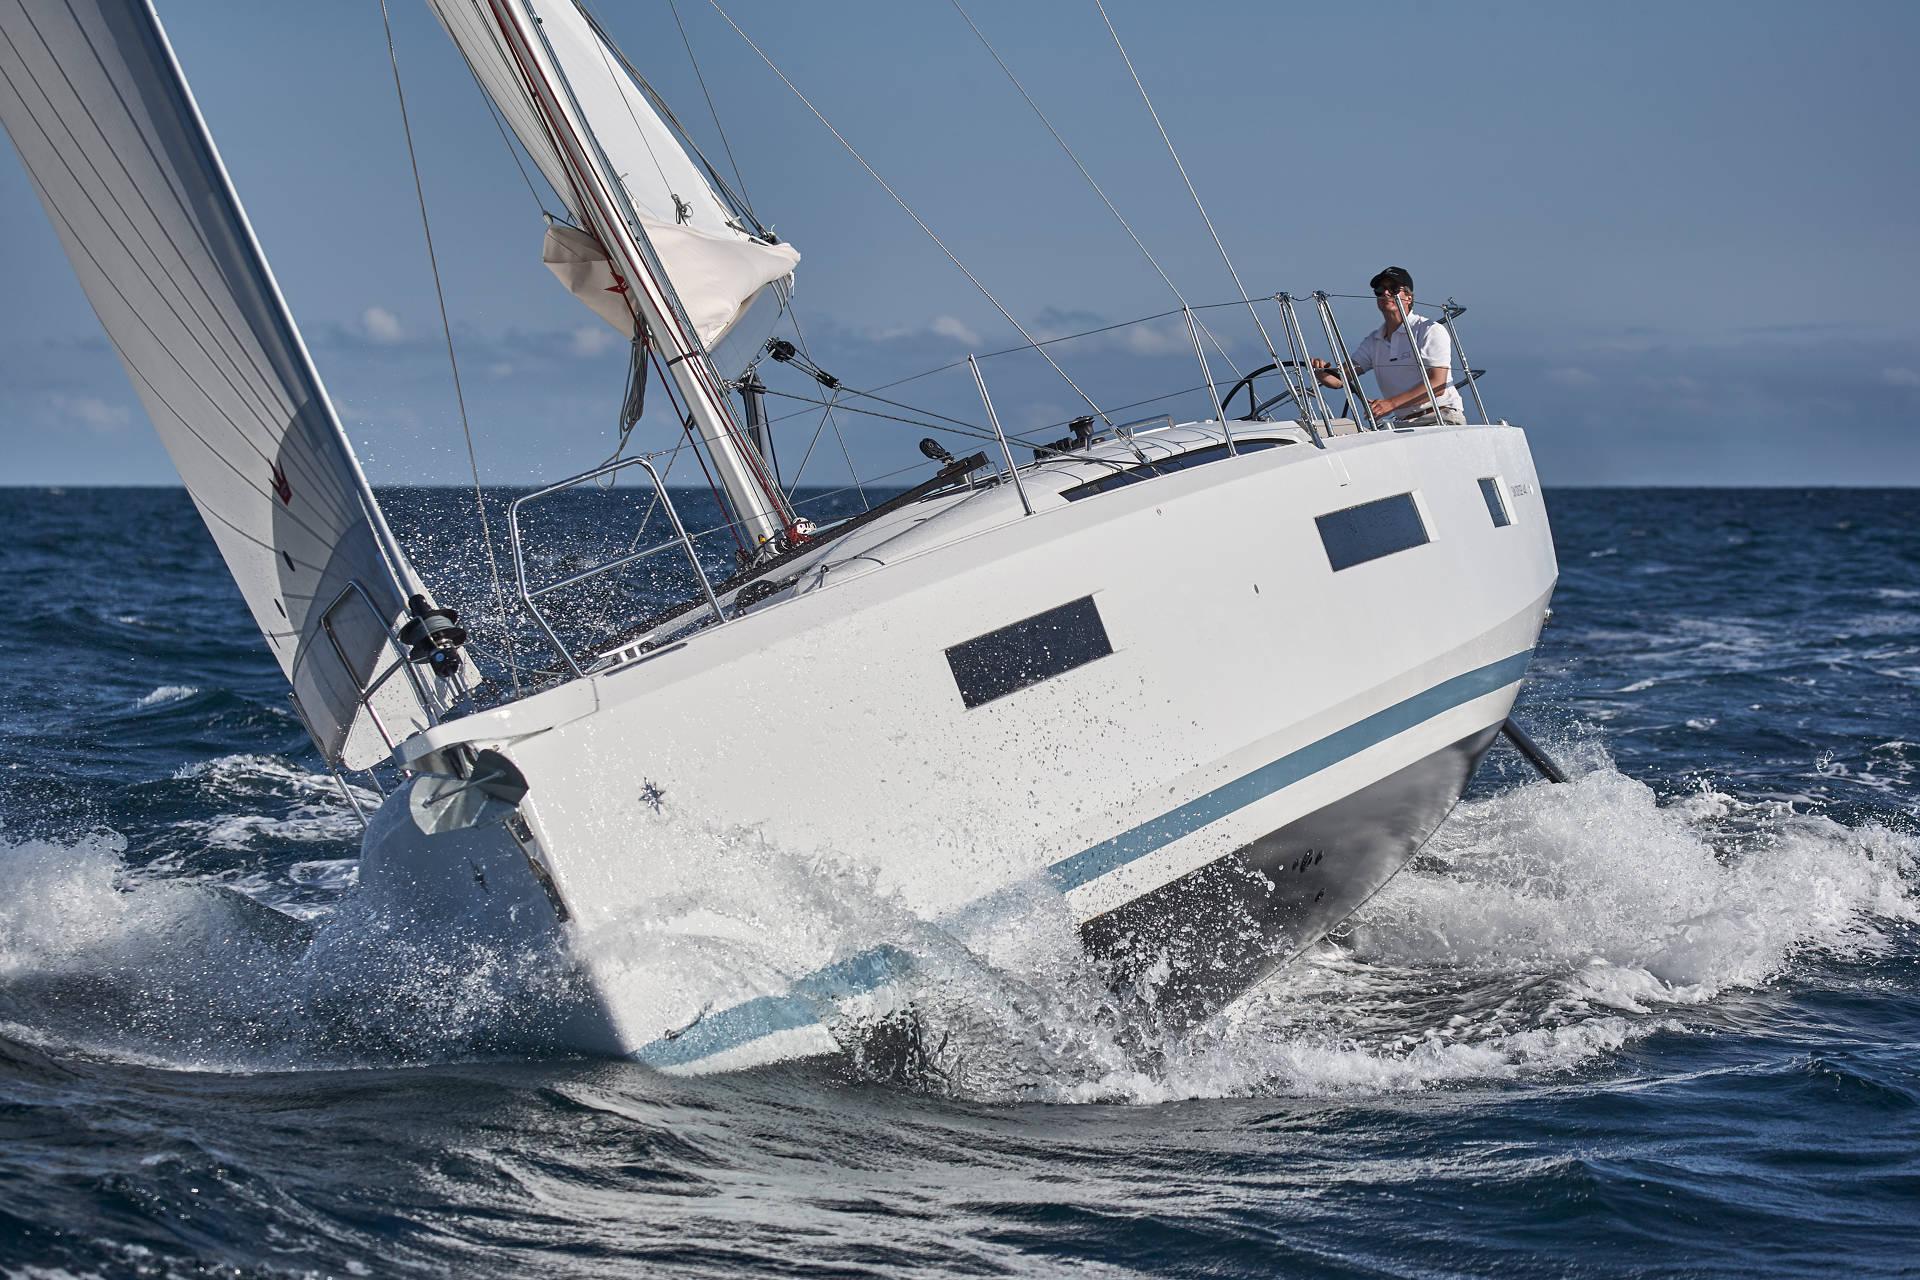 Sail boat FOR CHARTER, year 2021 brand Jeanneau and model Sun Odyssey 440, available in Port  Marina Palamós Palamós Girona España